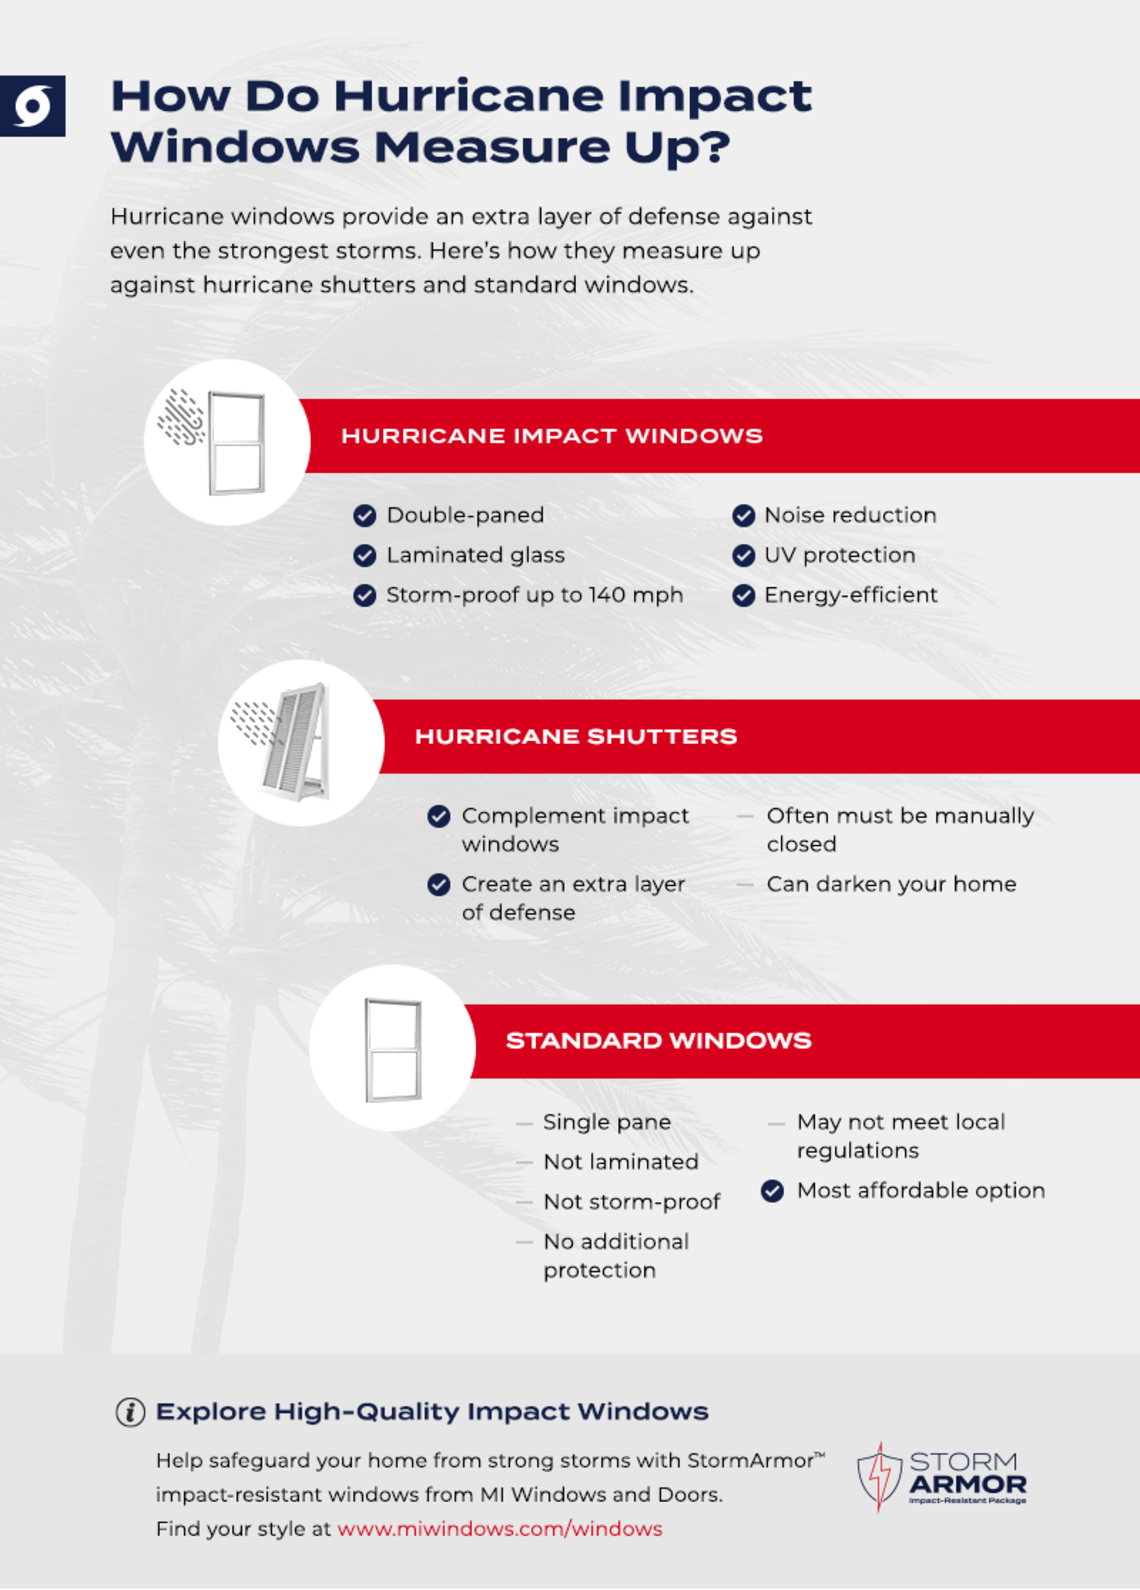 hurricane impact windows guide, MI Windows and Doors